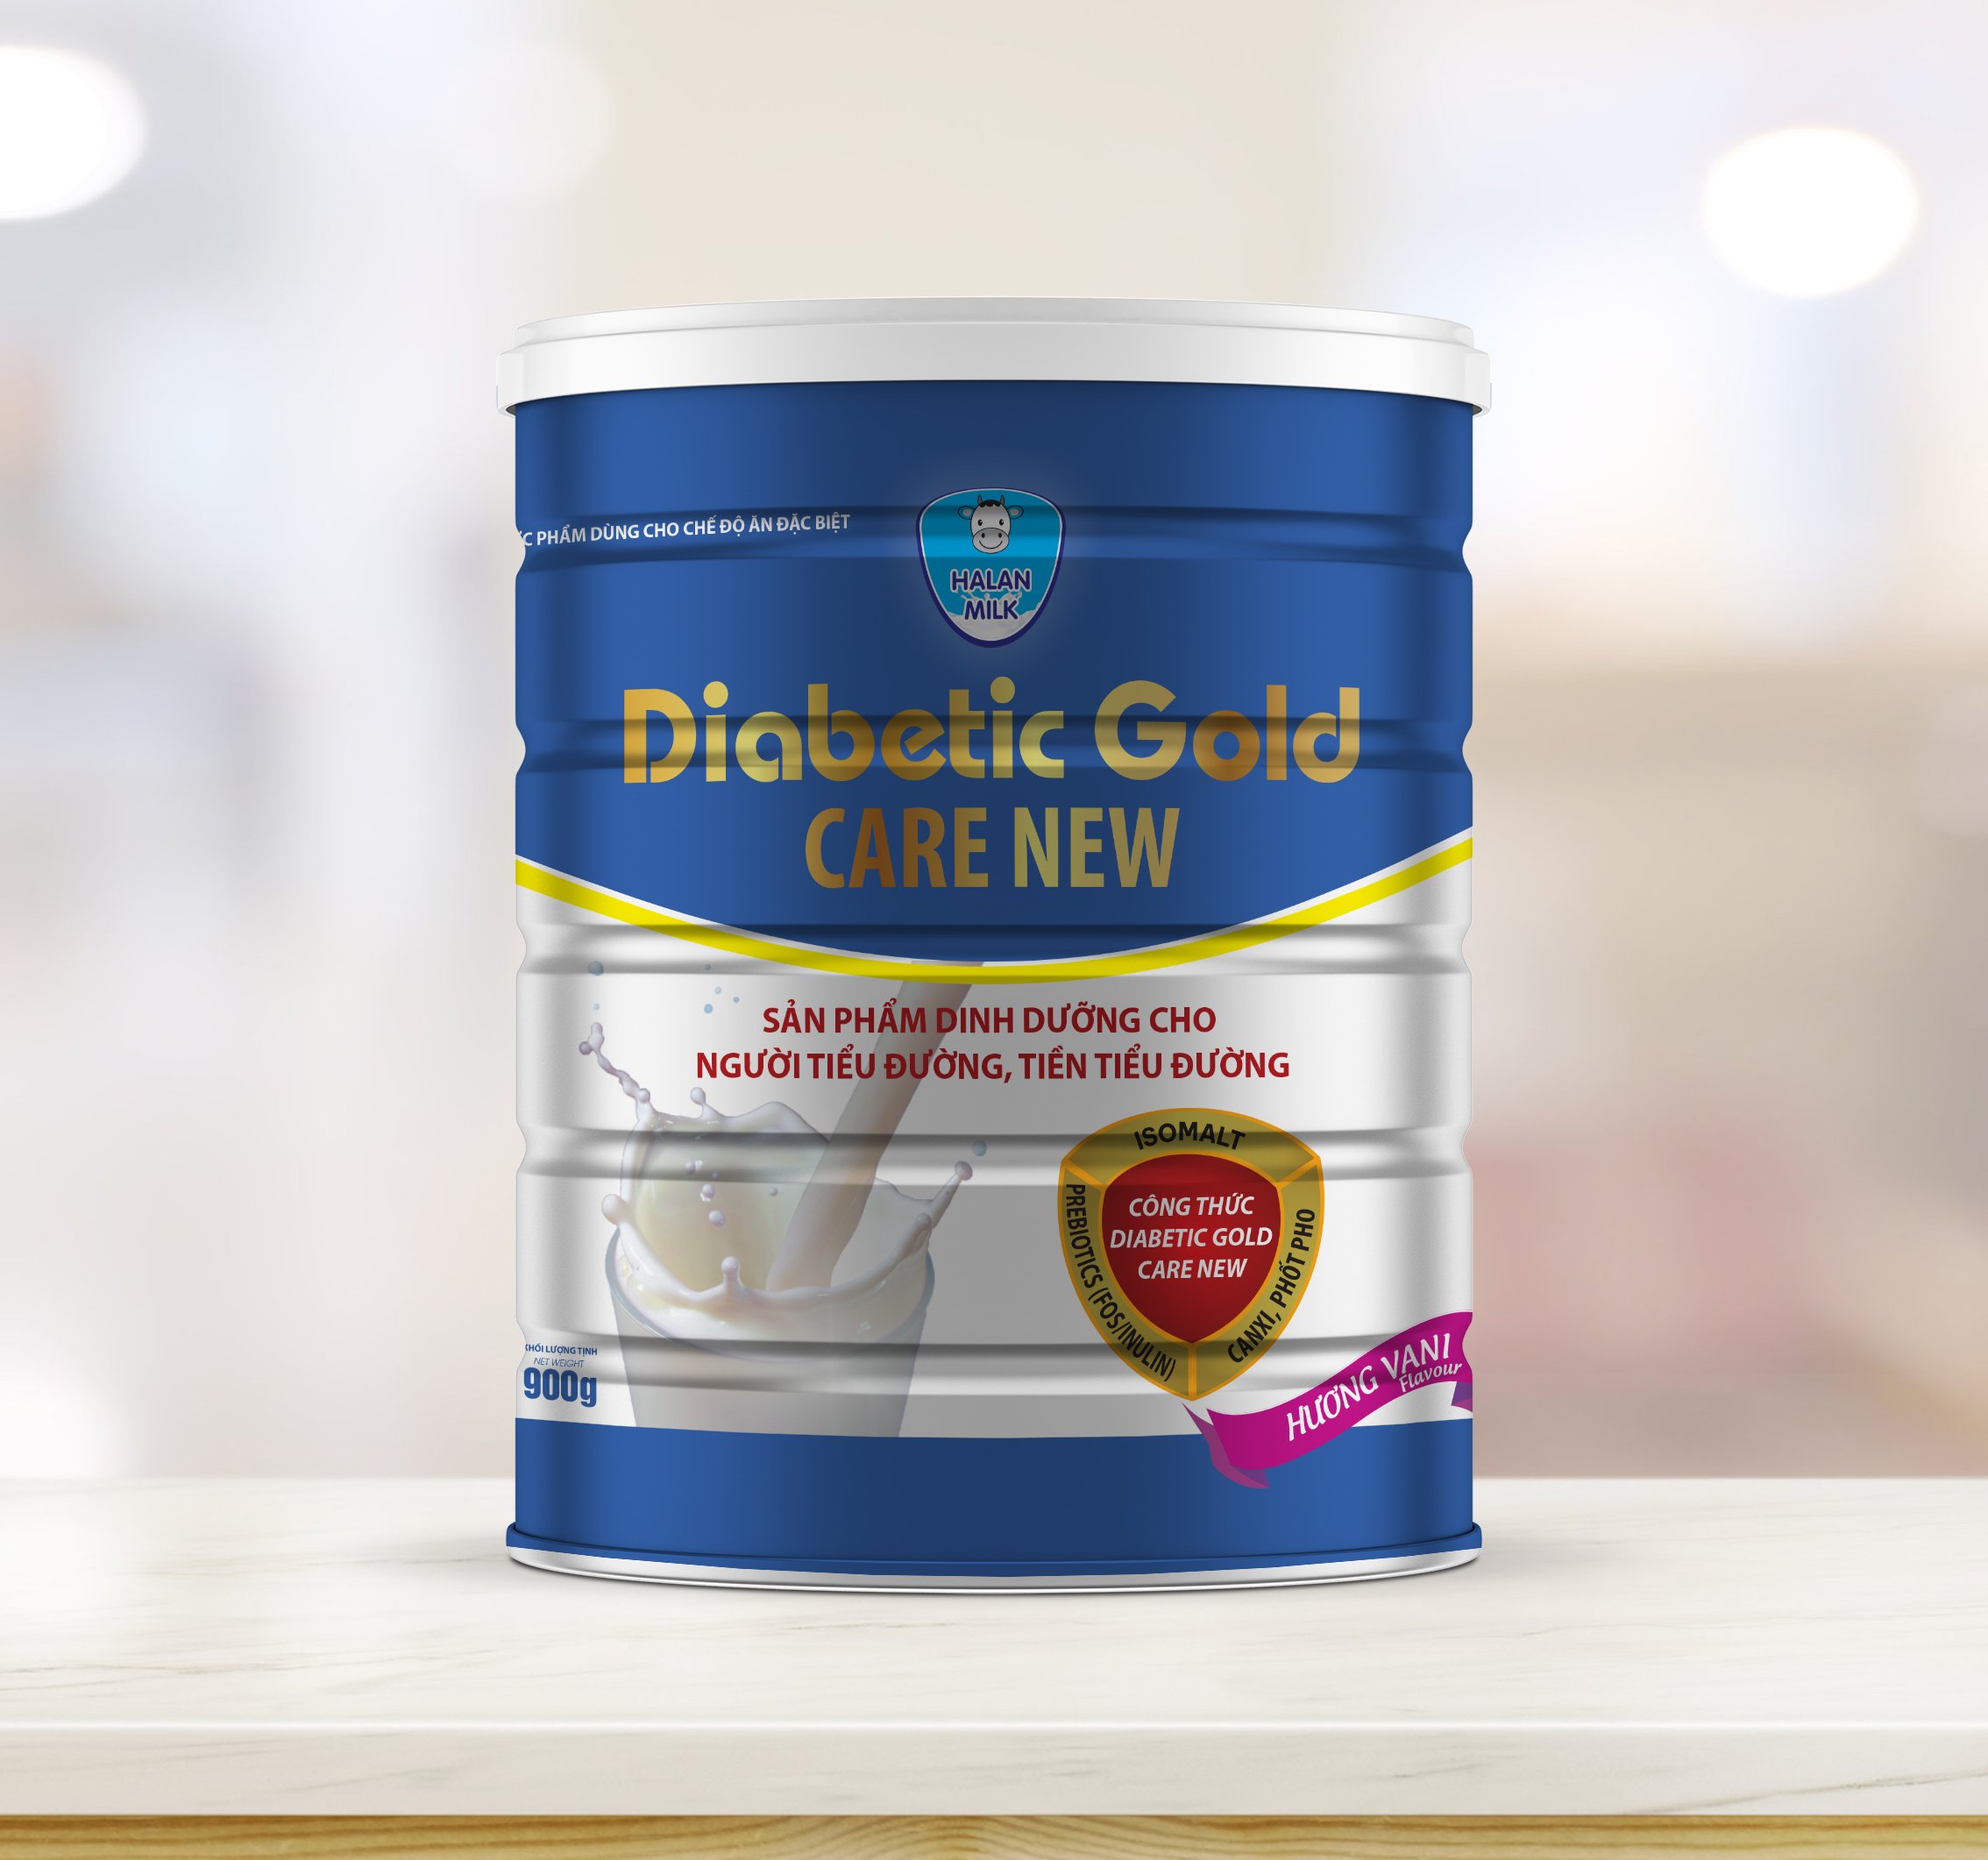 DIABETIC GOLD CARE NEW 900g